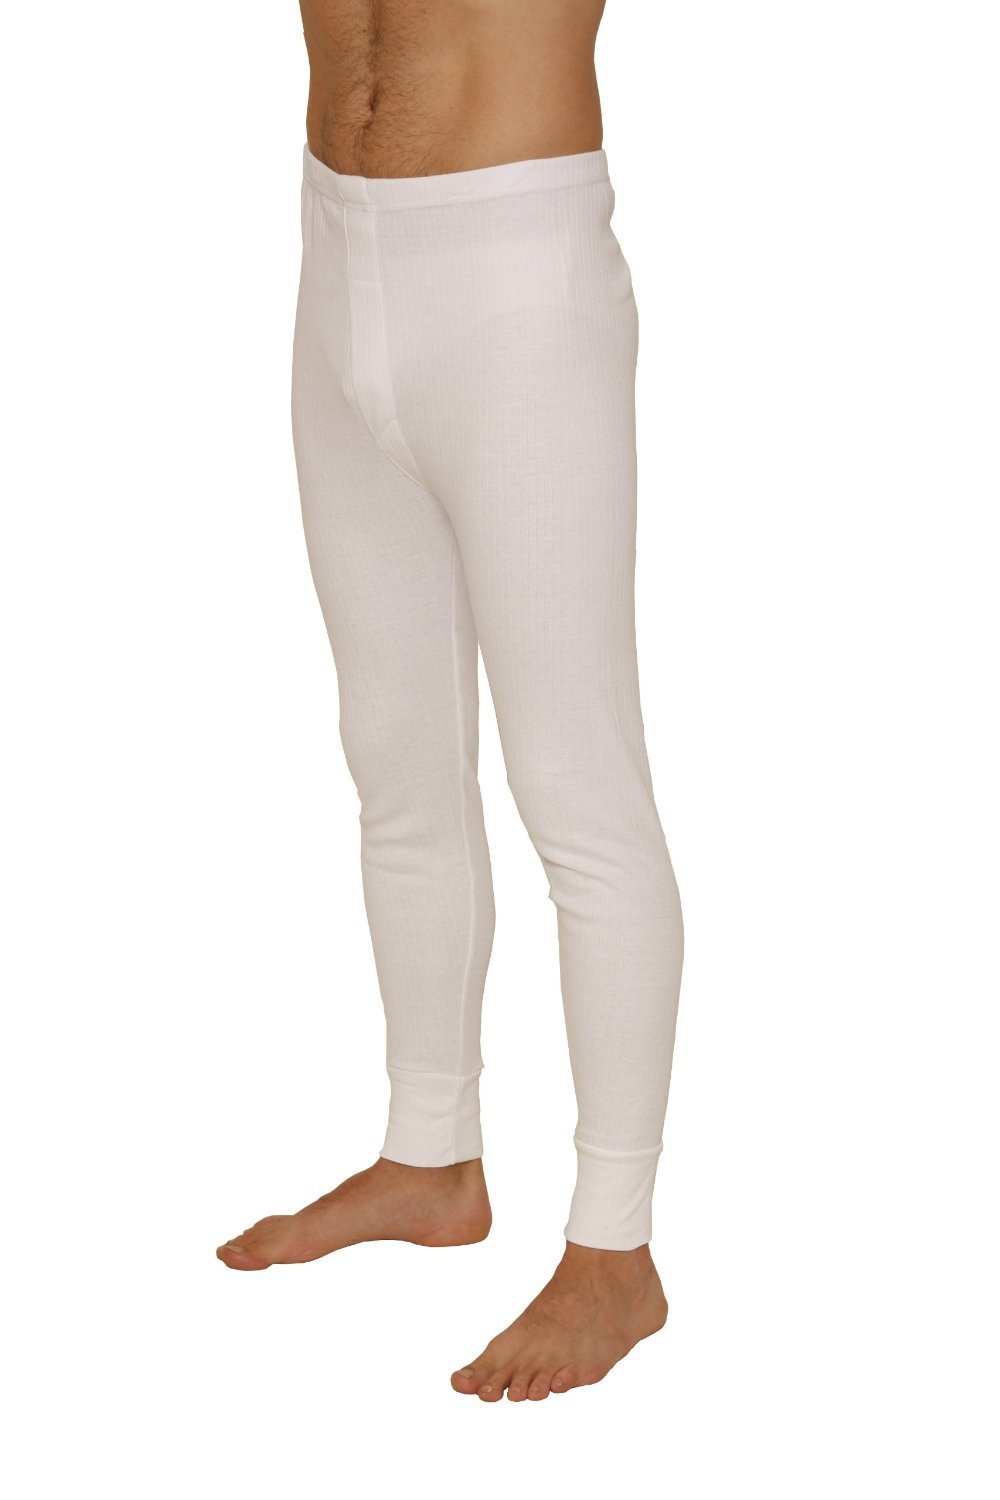 Octave® Mens Thermal Underwear Long John - British Thermals